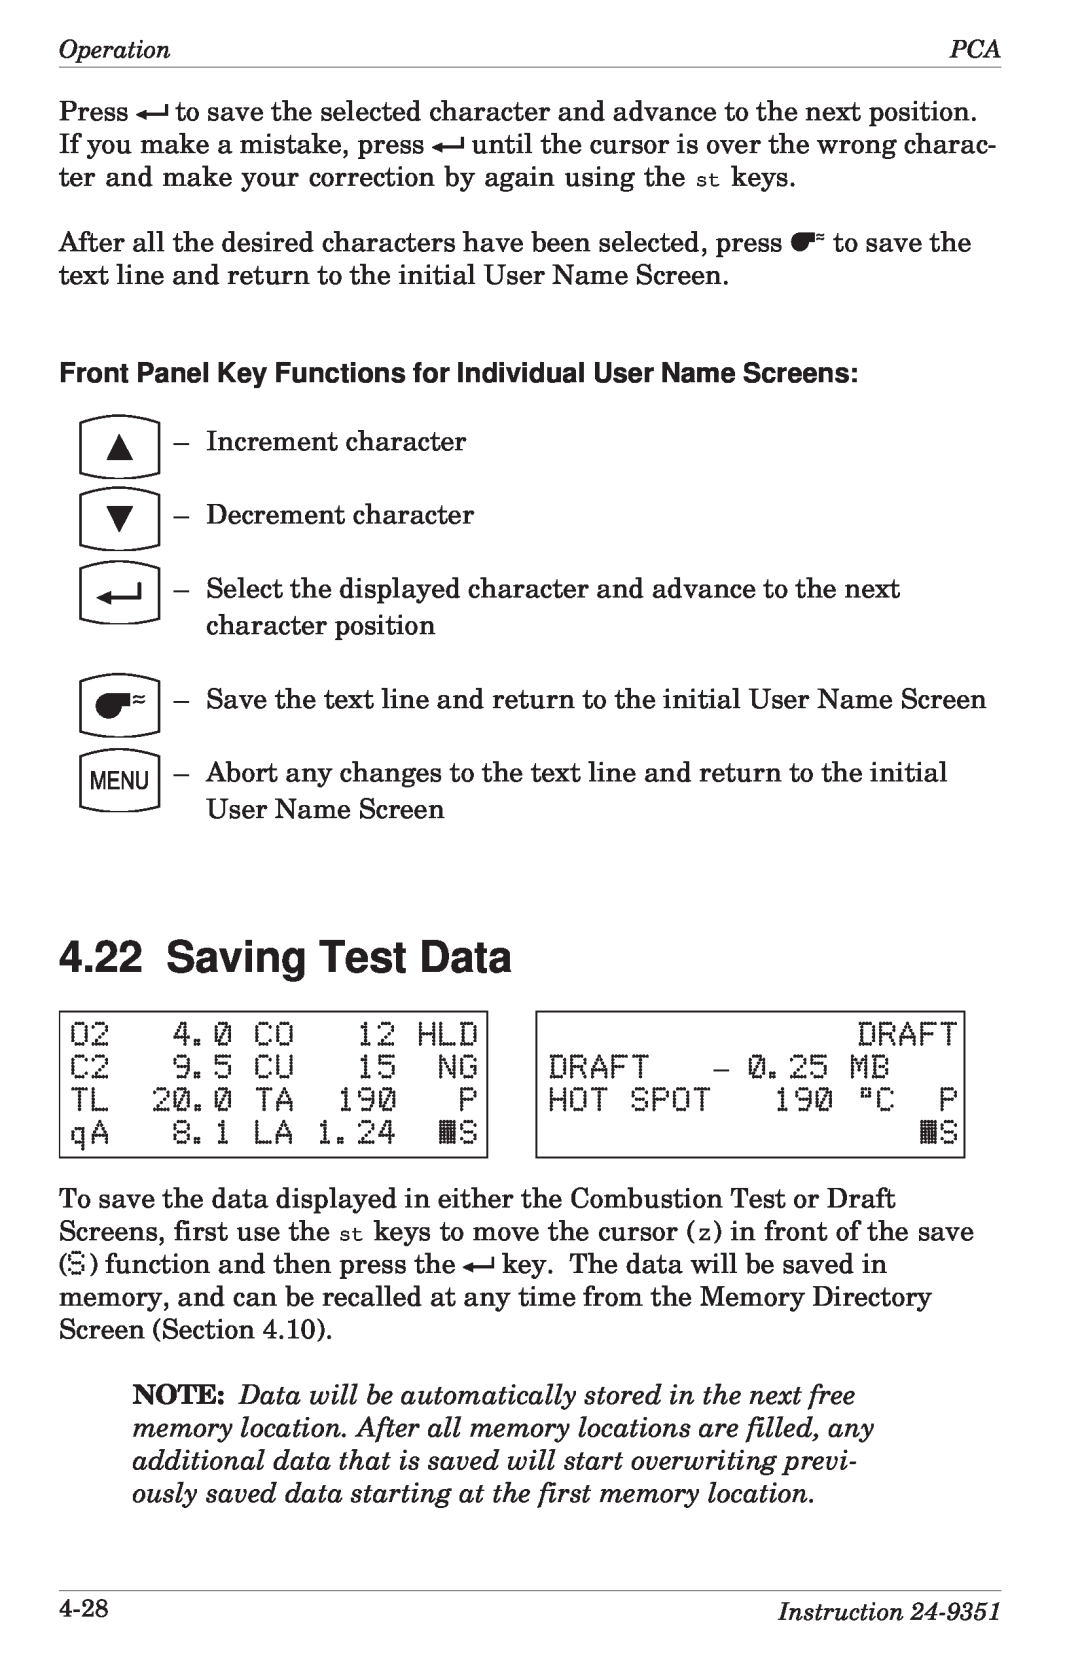 Bacharach 24-9351 manual Saving Test Data, 20.0, DRAFT DRAFT – 0.25 MB HOT SPOT 190 C P «S 